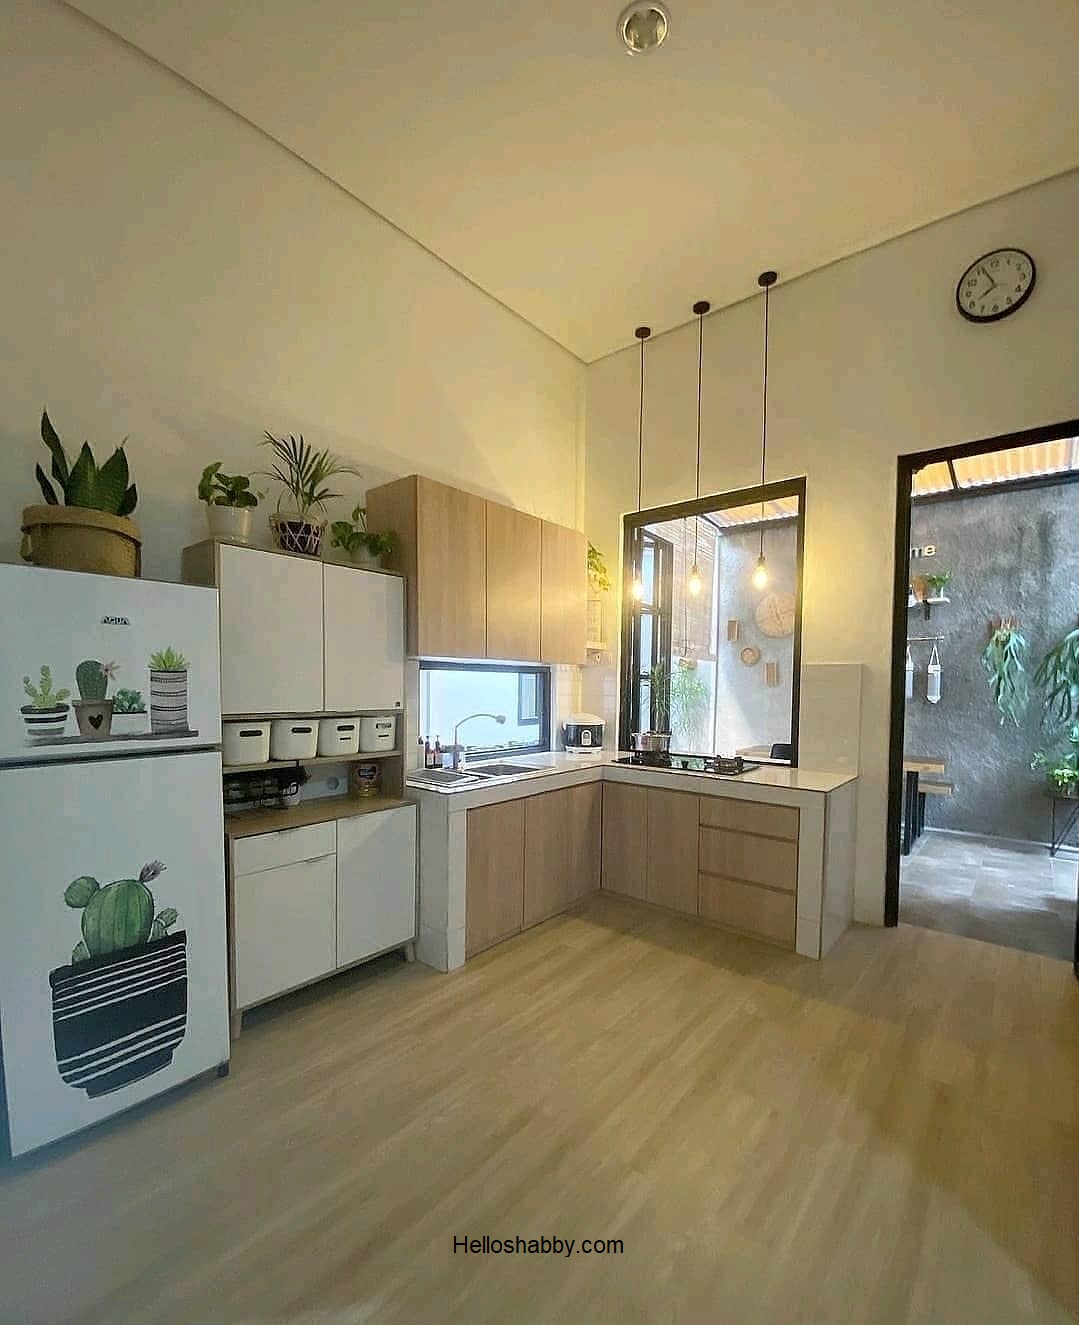 6 Contoh Desain Dapur Belakang Dekat Teras Belakang HelloShabbycom Interior And Exterior Solutions